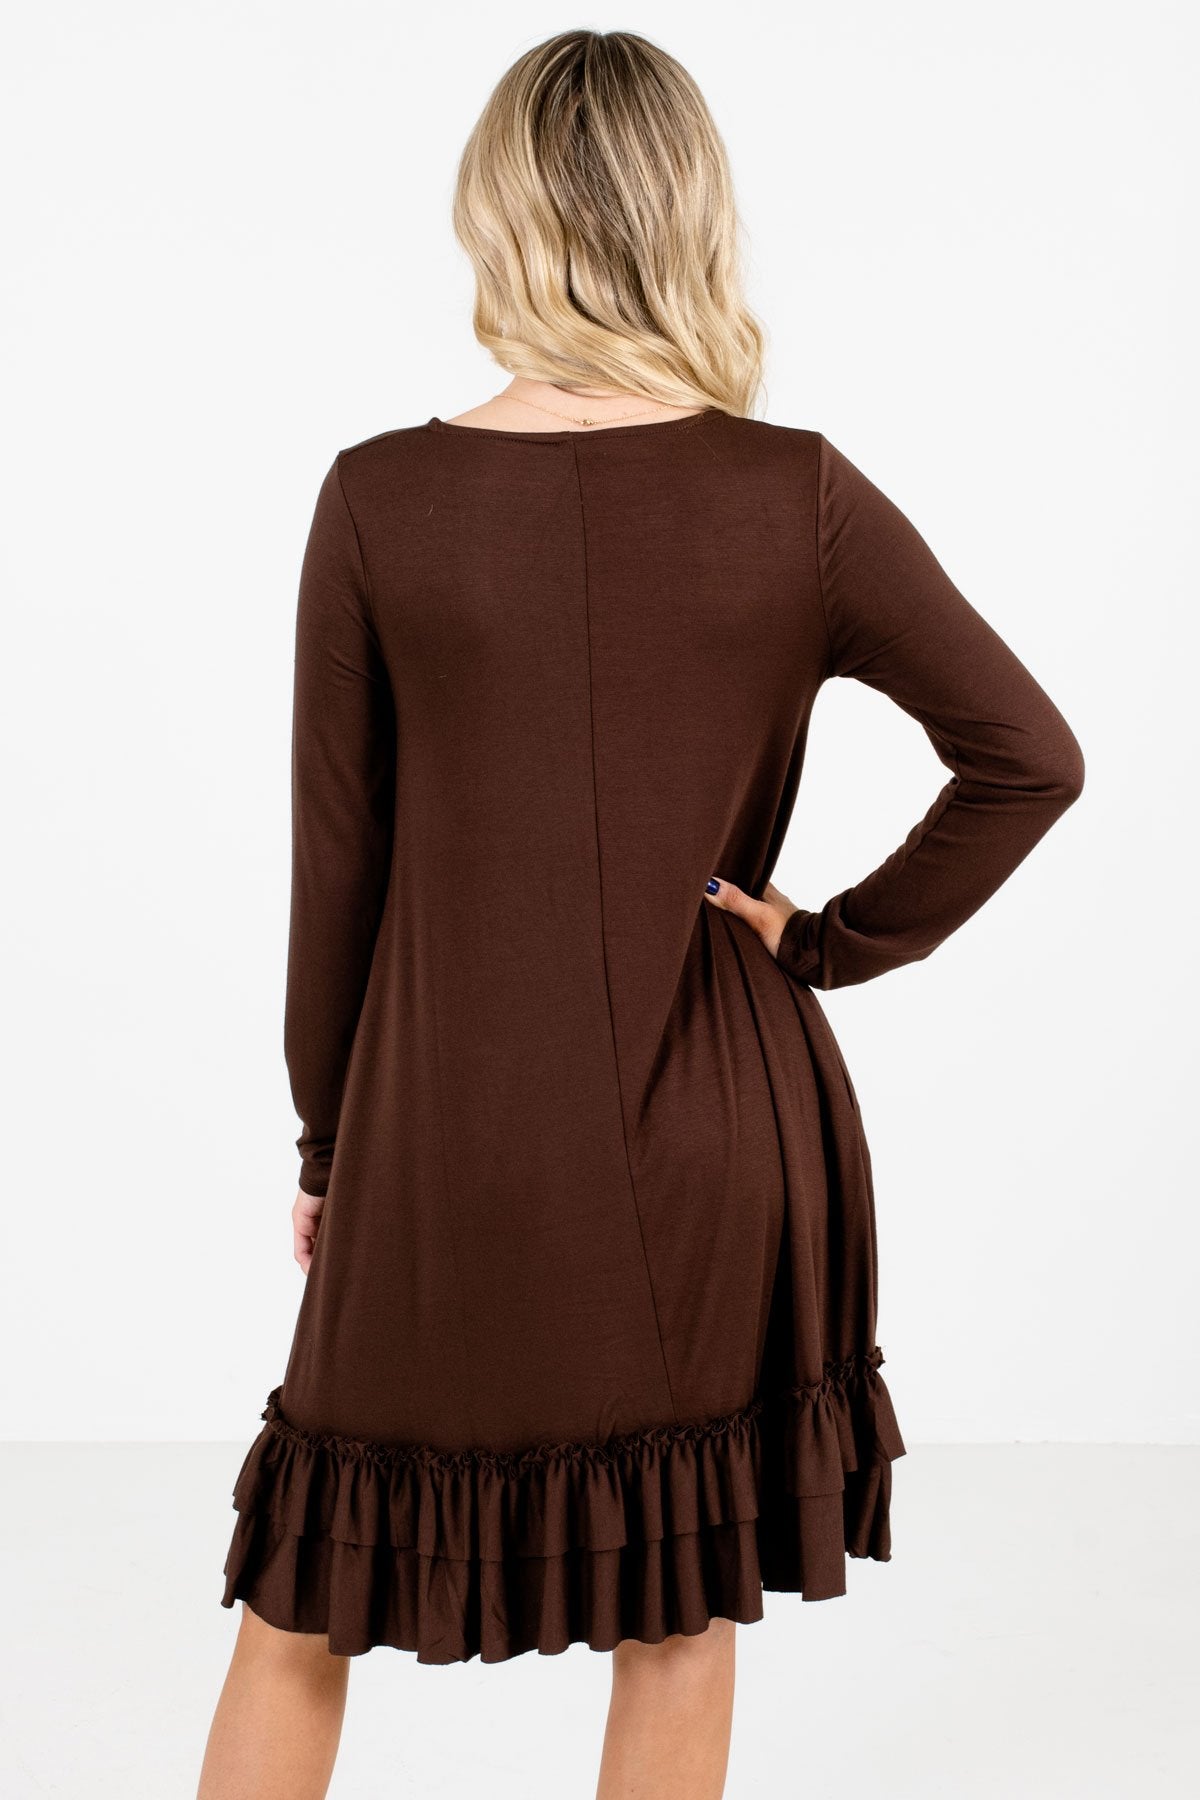 Women's Brown Long Sleeve Boutique Knee-Length Dress